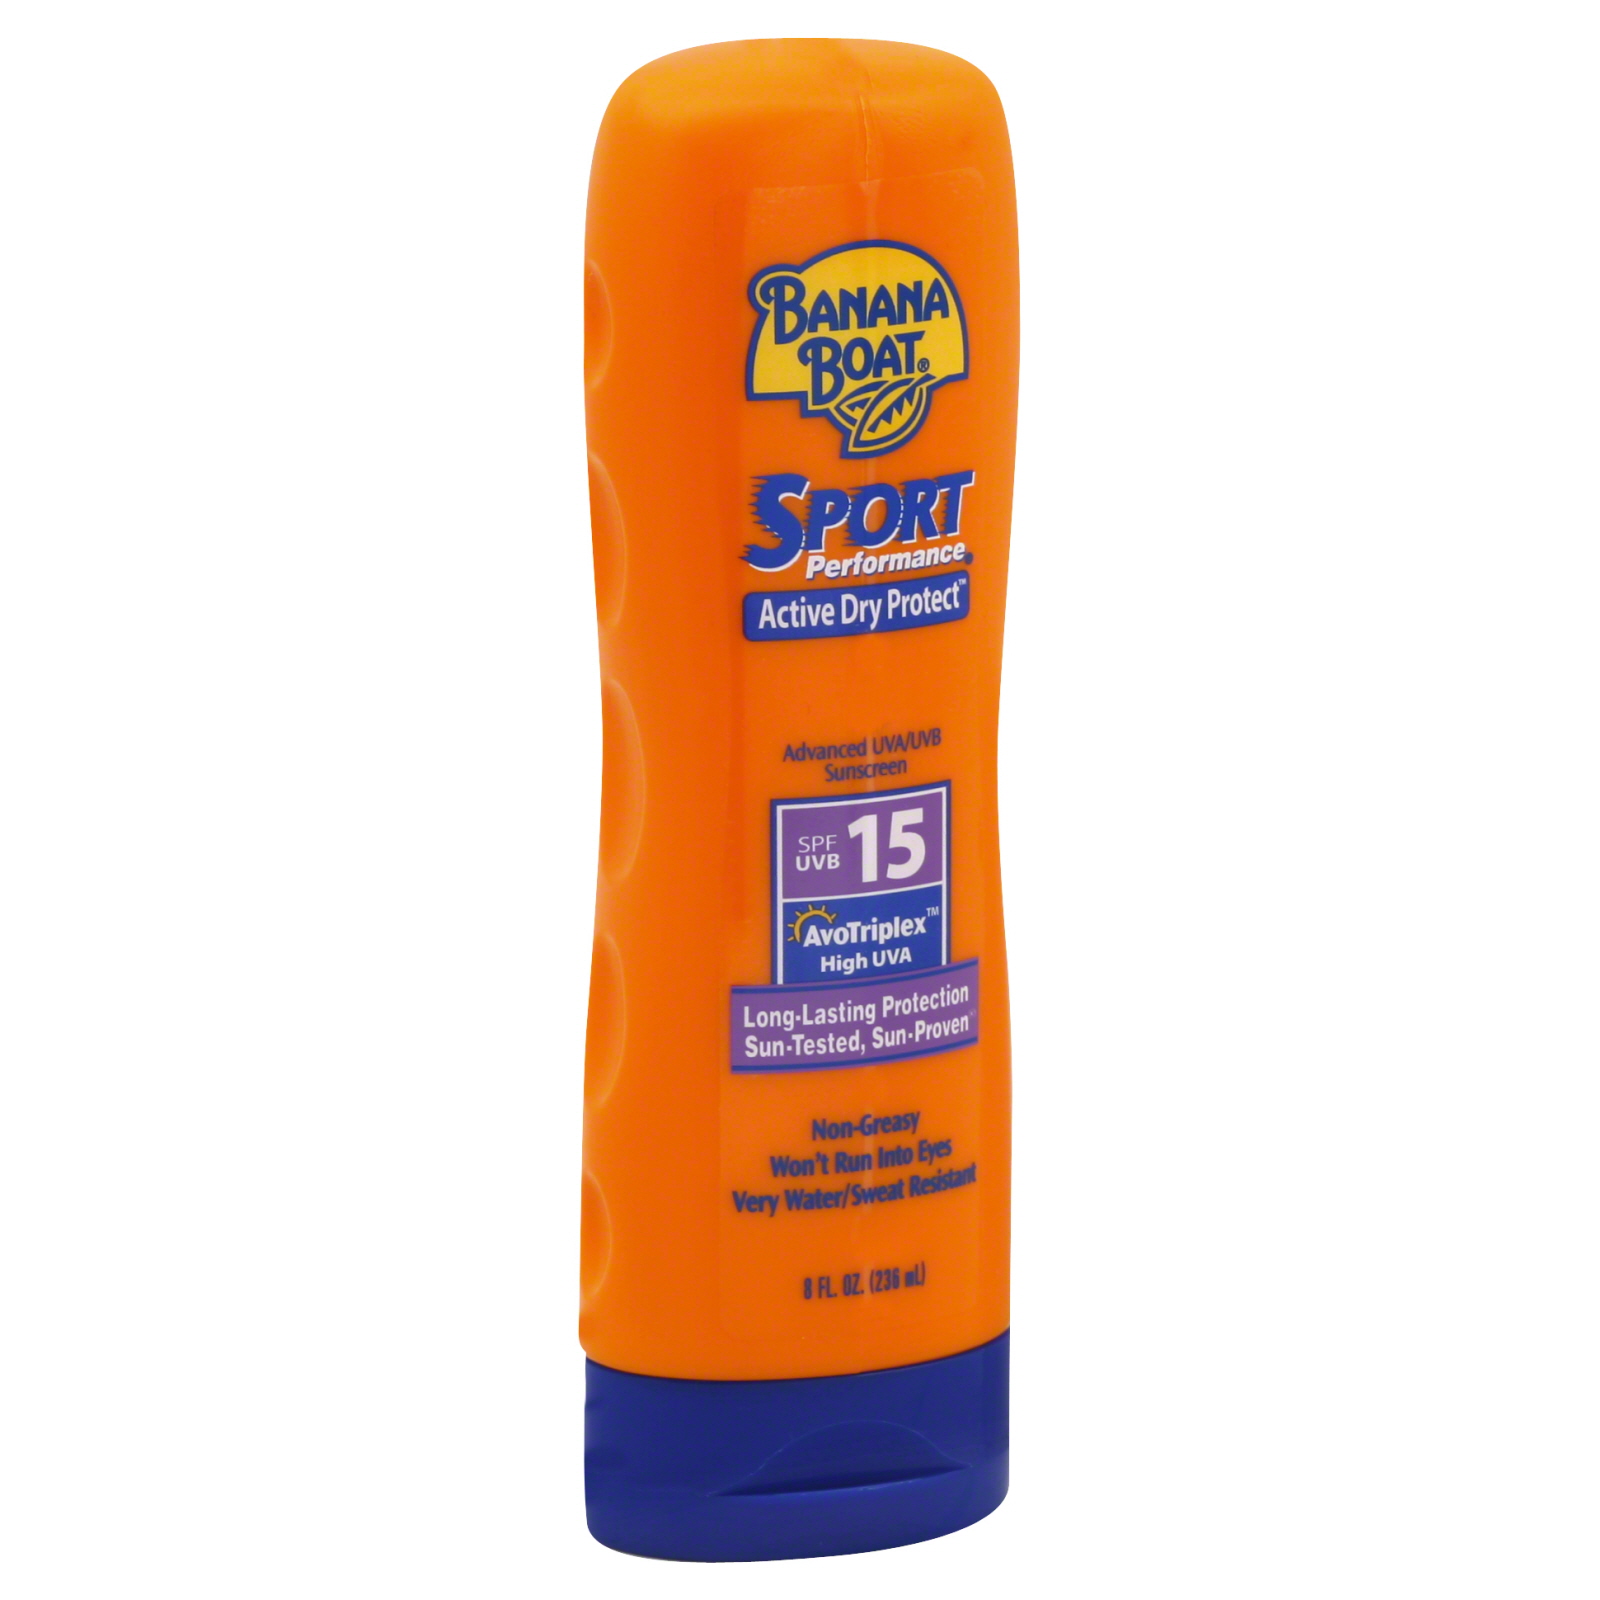 Banana Boat Sport Performance Sunscreen, Active Dry Protect, SPF 15, 8 fl oz (236 ml)